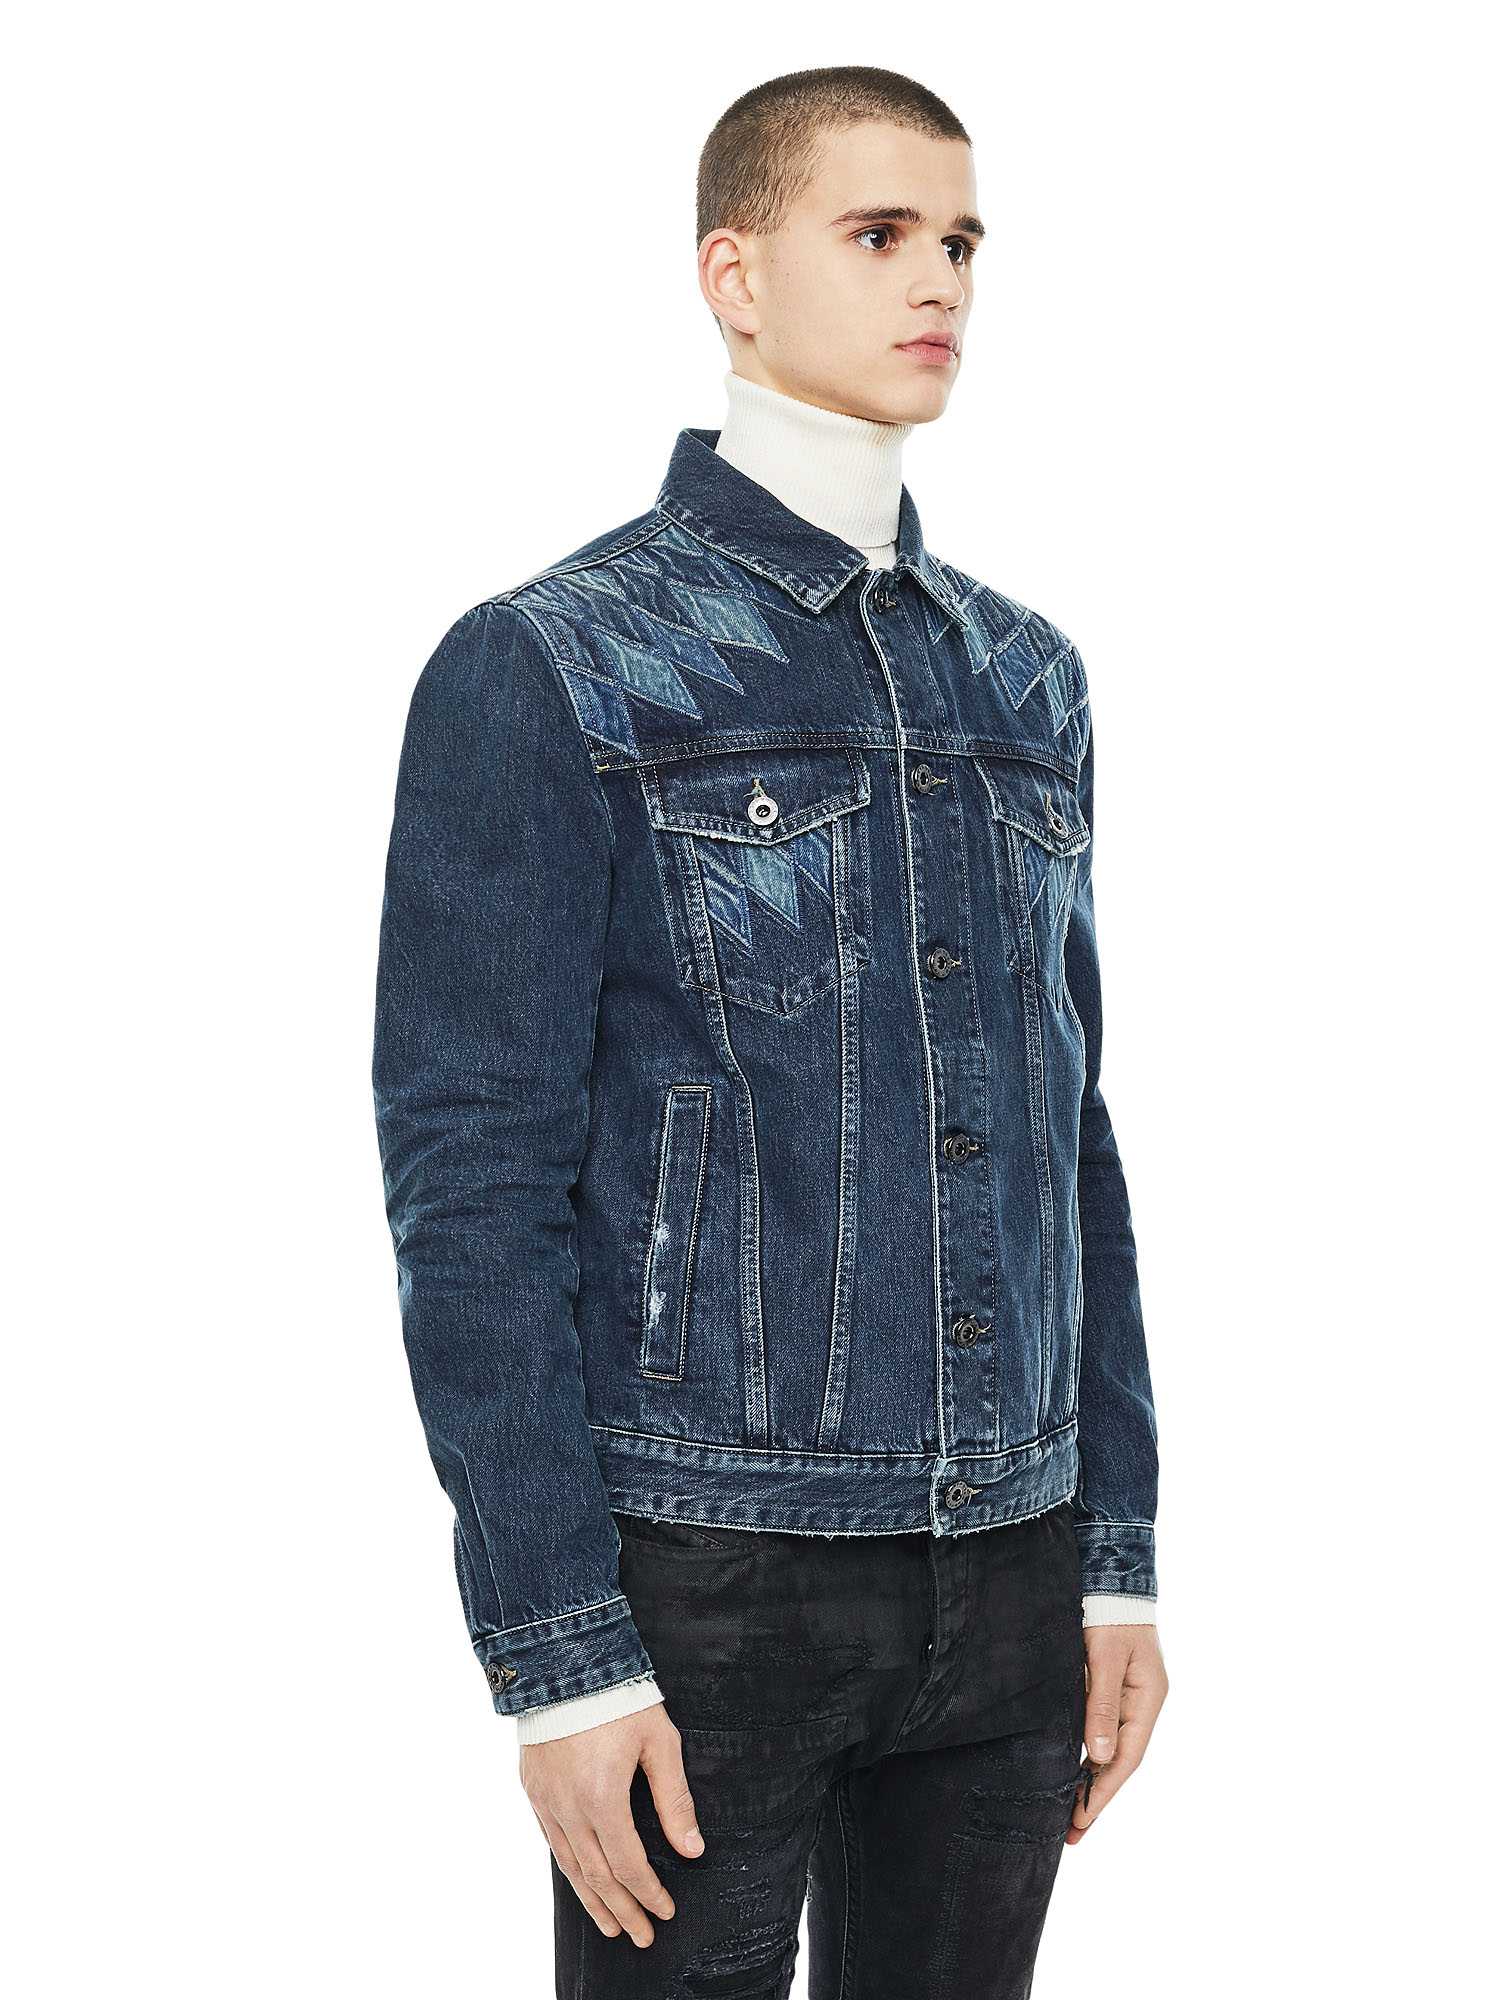 JONDER Men: Denim jacket with patchwork embroidery | Diesel